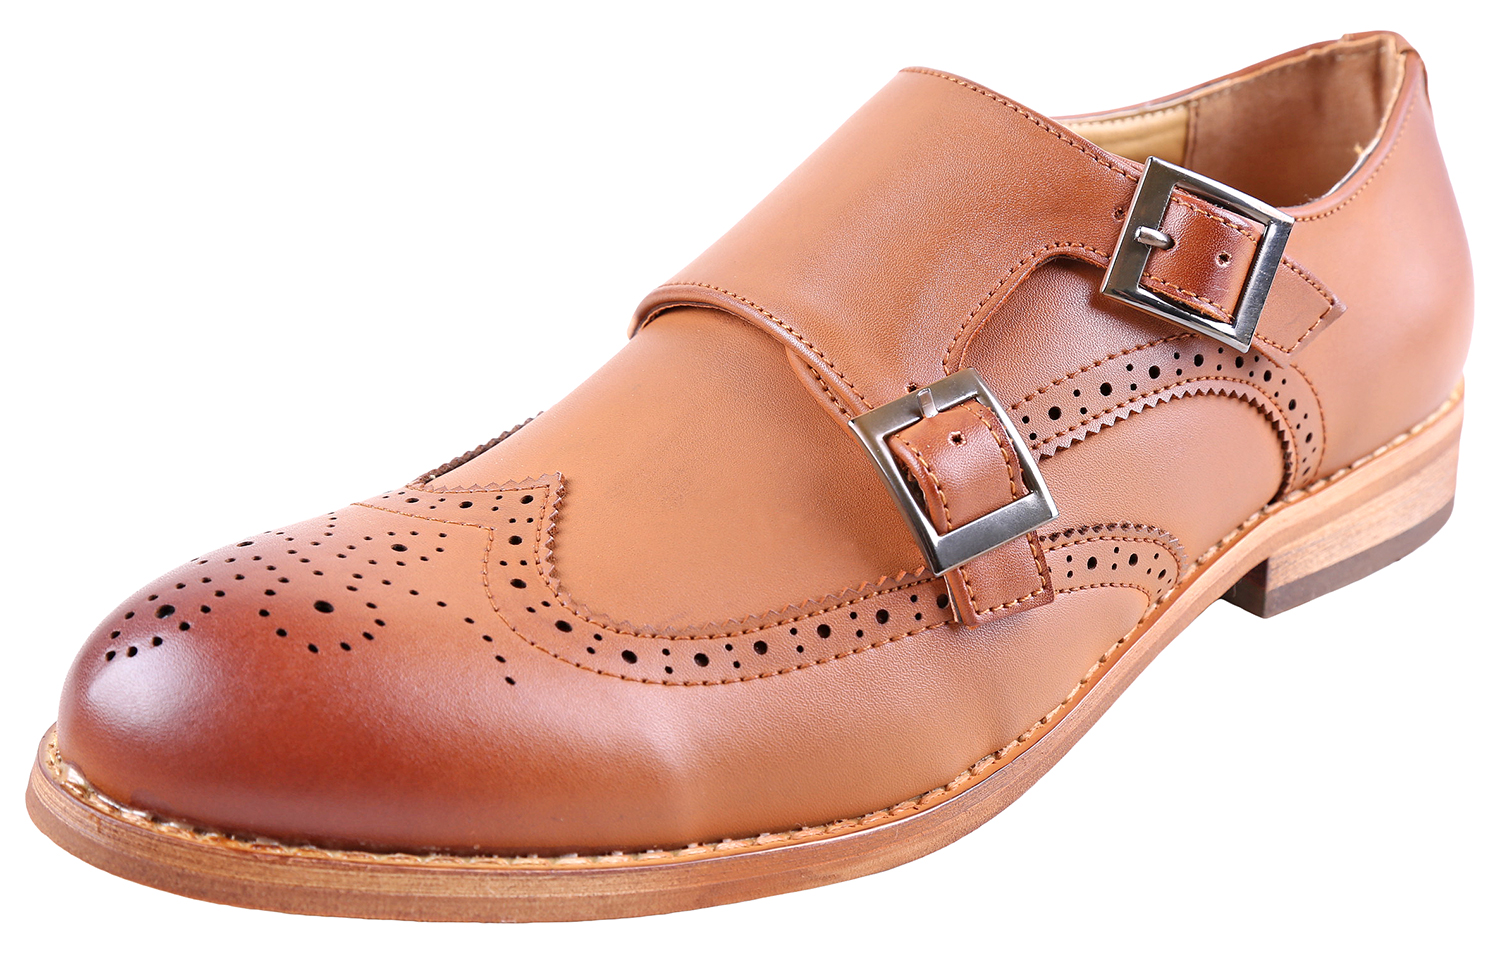 Urban Fox Allen Men's Dress Shoe | Double Monk Strap | Brogue | Wingtip Shoes for Men | Light Brown 13 M US - image 1 of 7